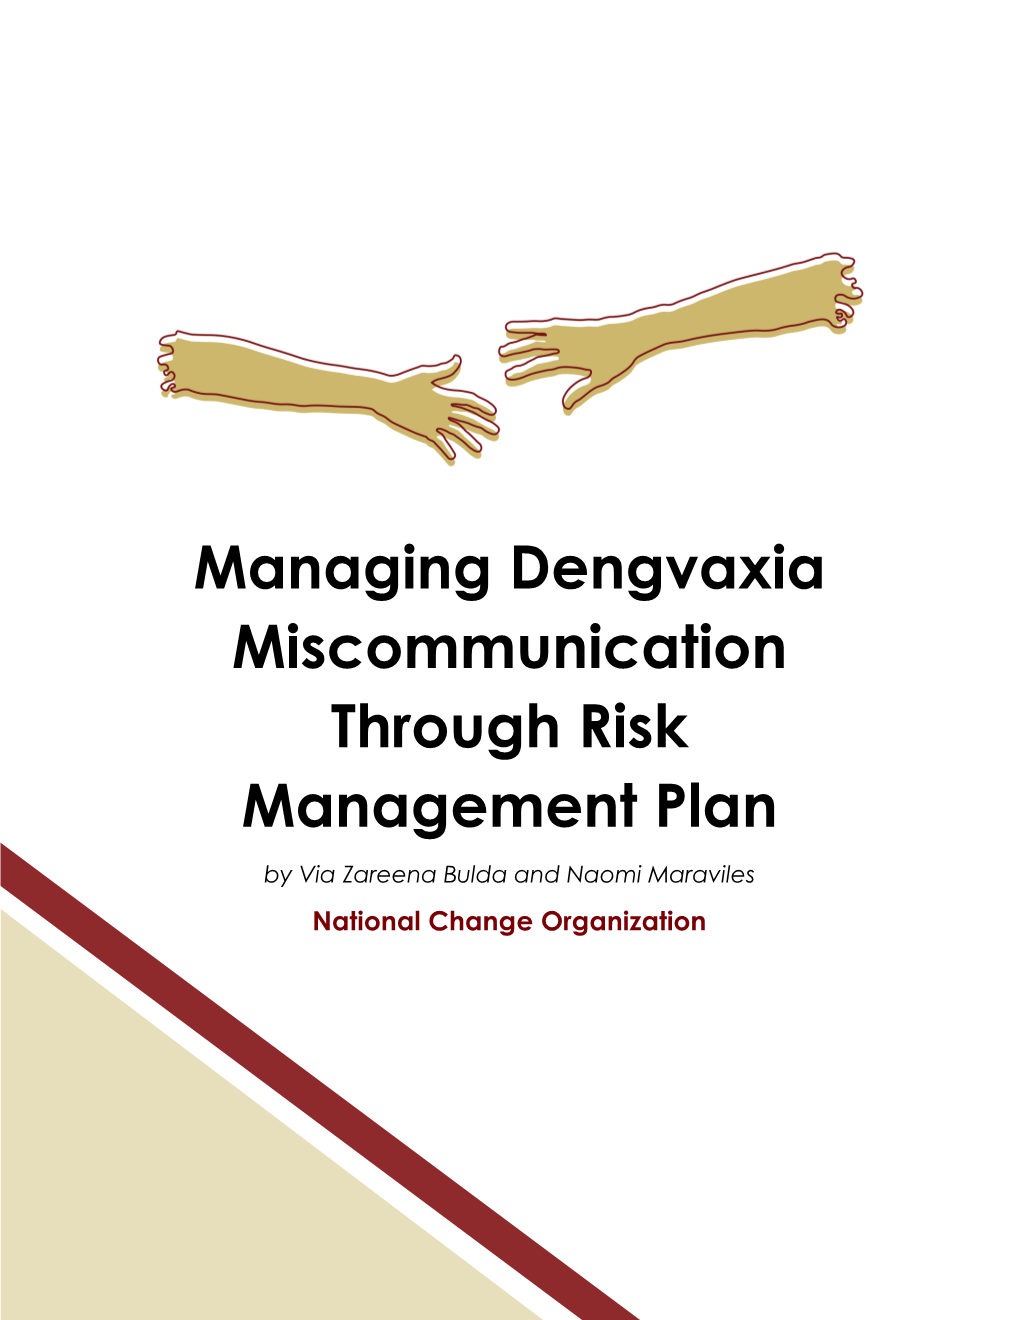 Managing Dengvaxia Miscommunication Through Risk